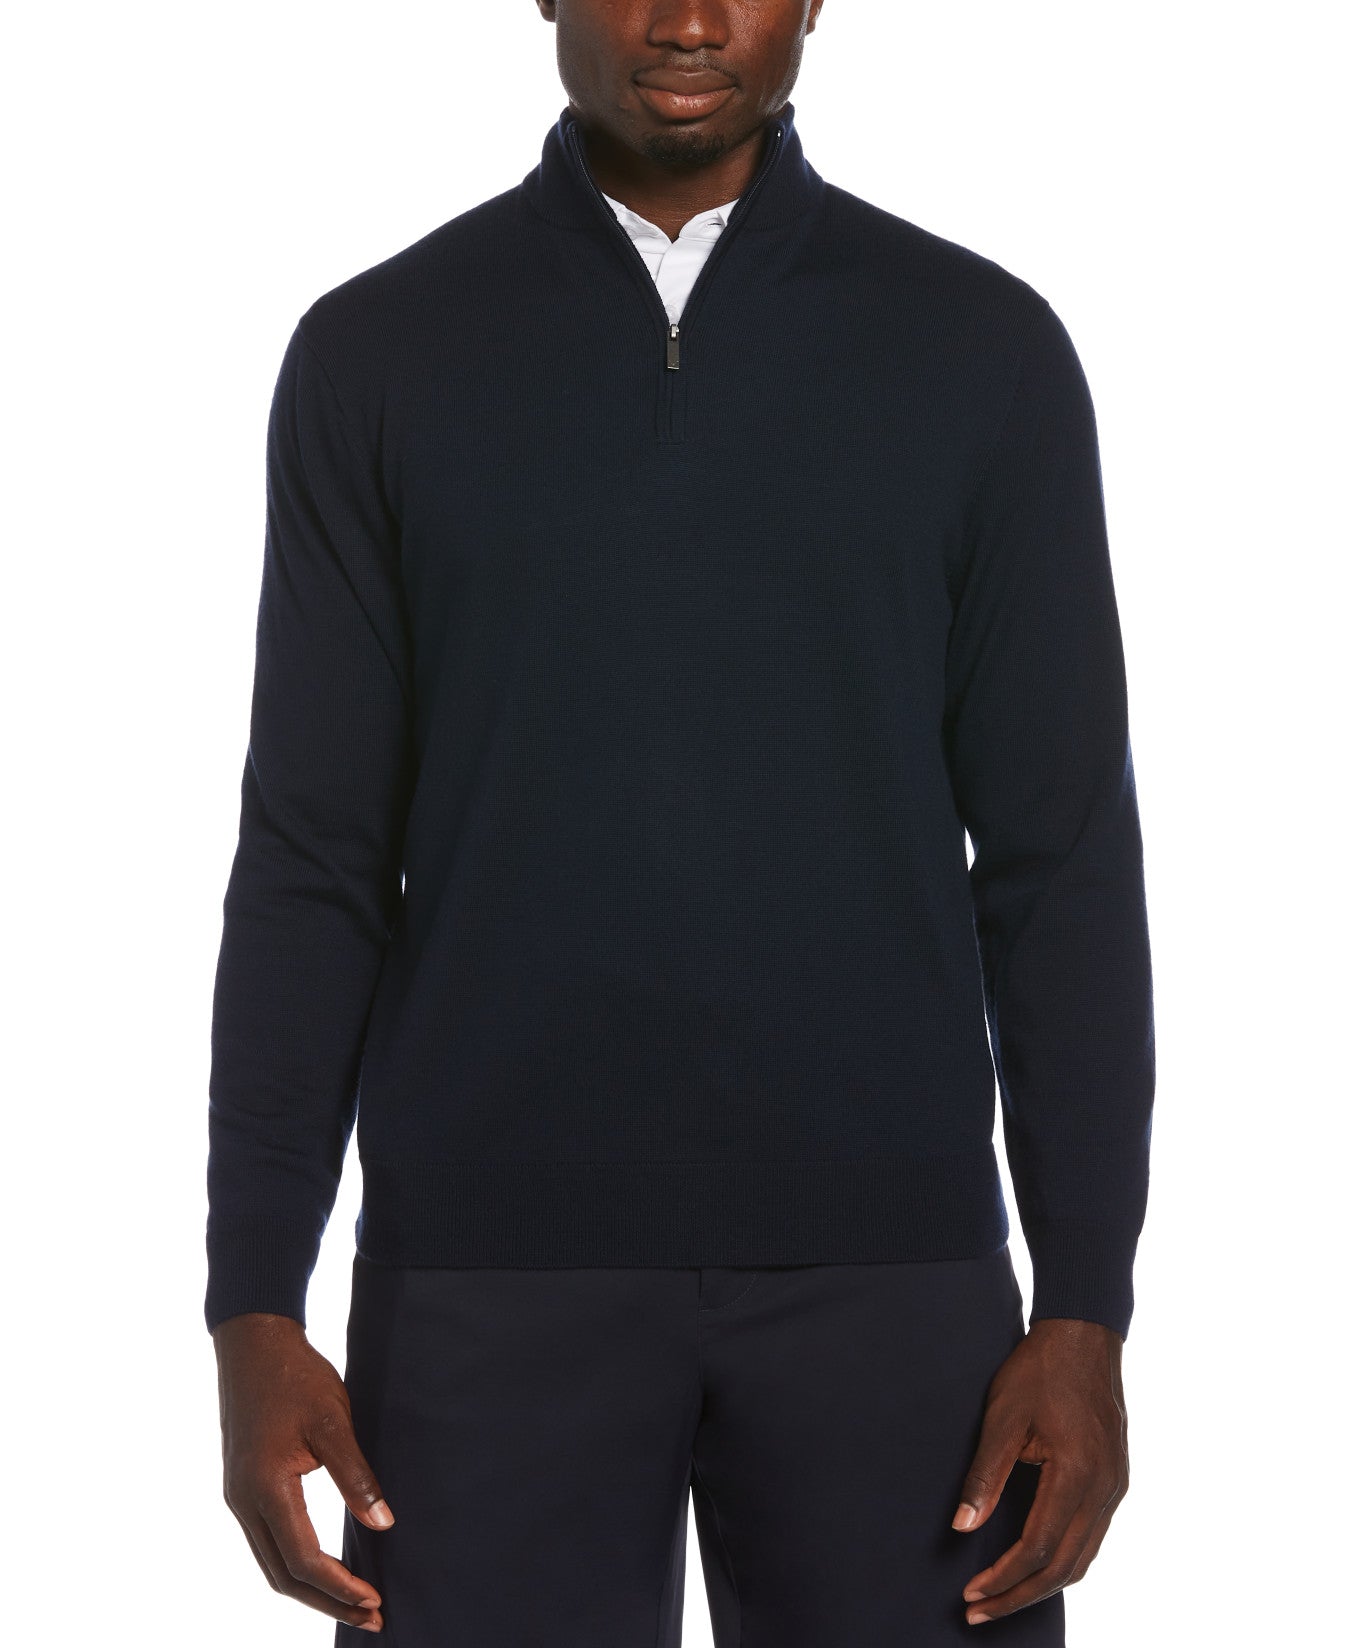 View Thermal Merino Wool Quarter Zip Sweater In Dark Navy Dark Navy XS information